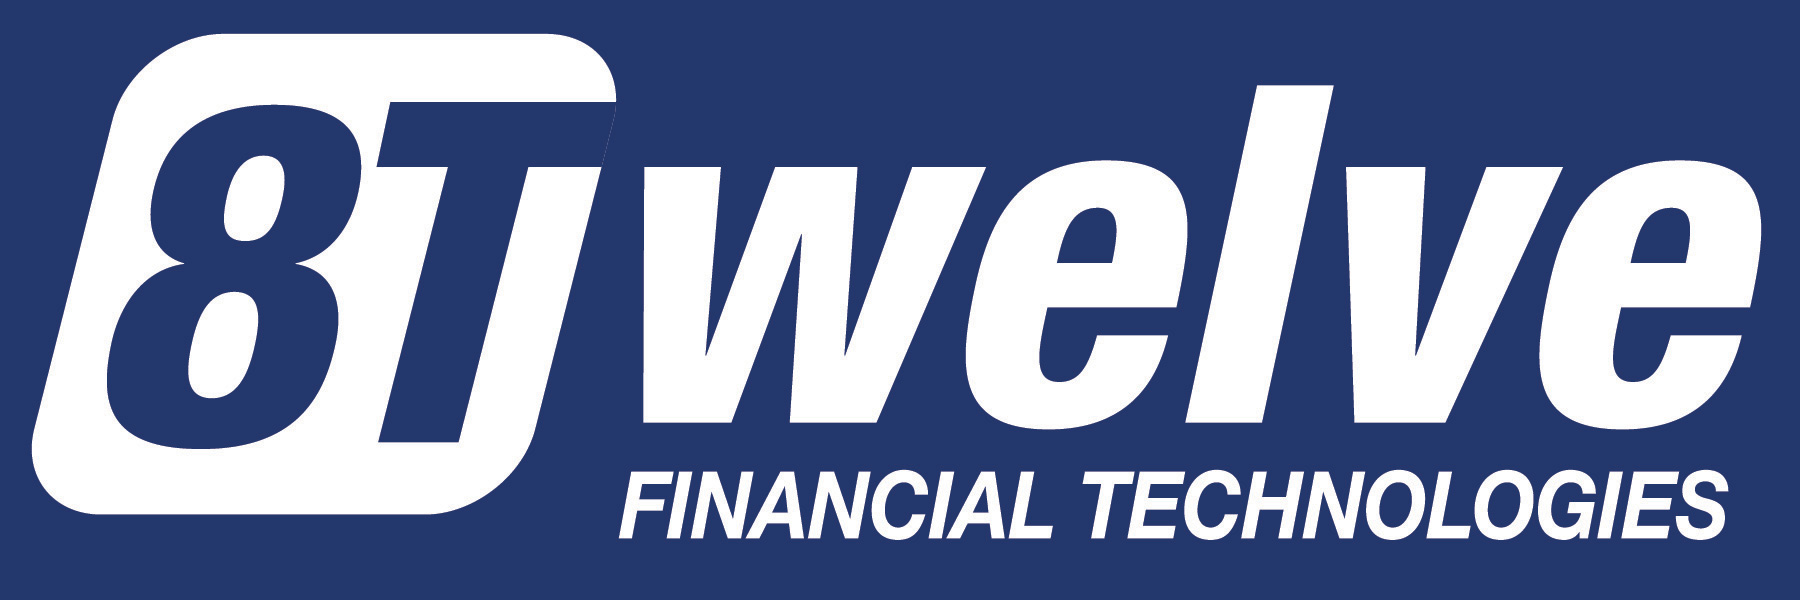 8Twelve-Financial-Technologies_Logo_Reverse_RGB.jpg